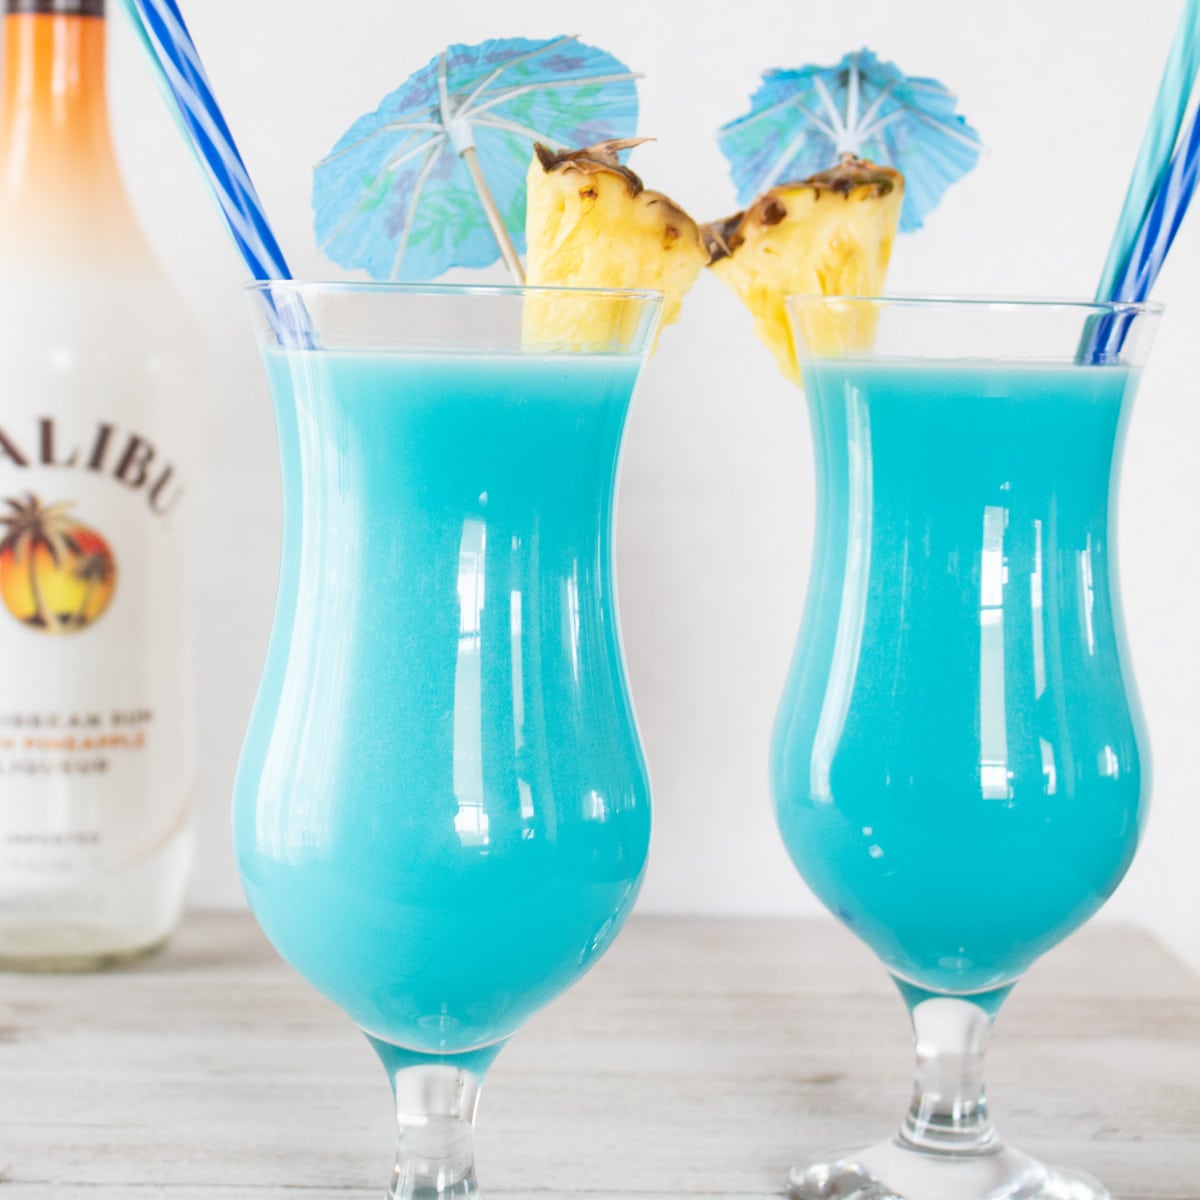 Koktail hawaii biru beku disajikan dalam gelas hurrican dengan hiasan nanas.